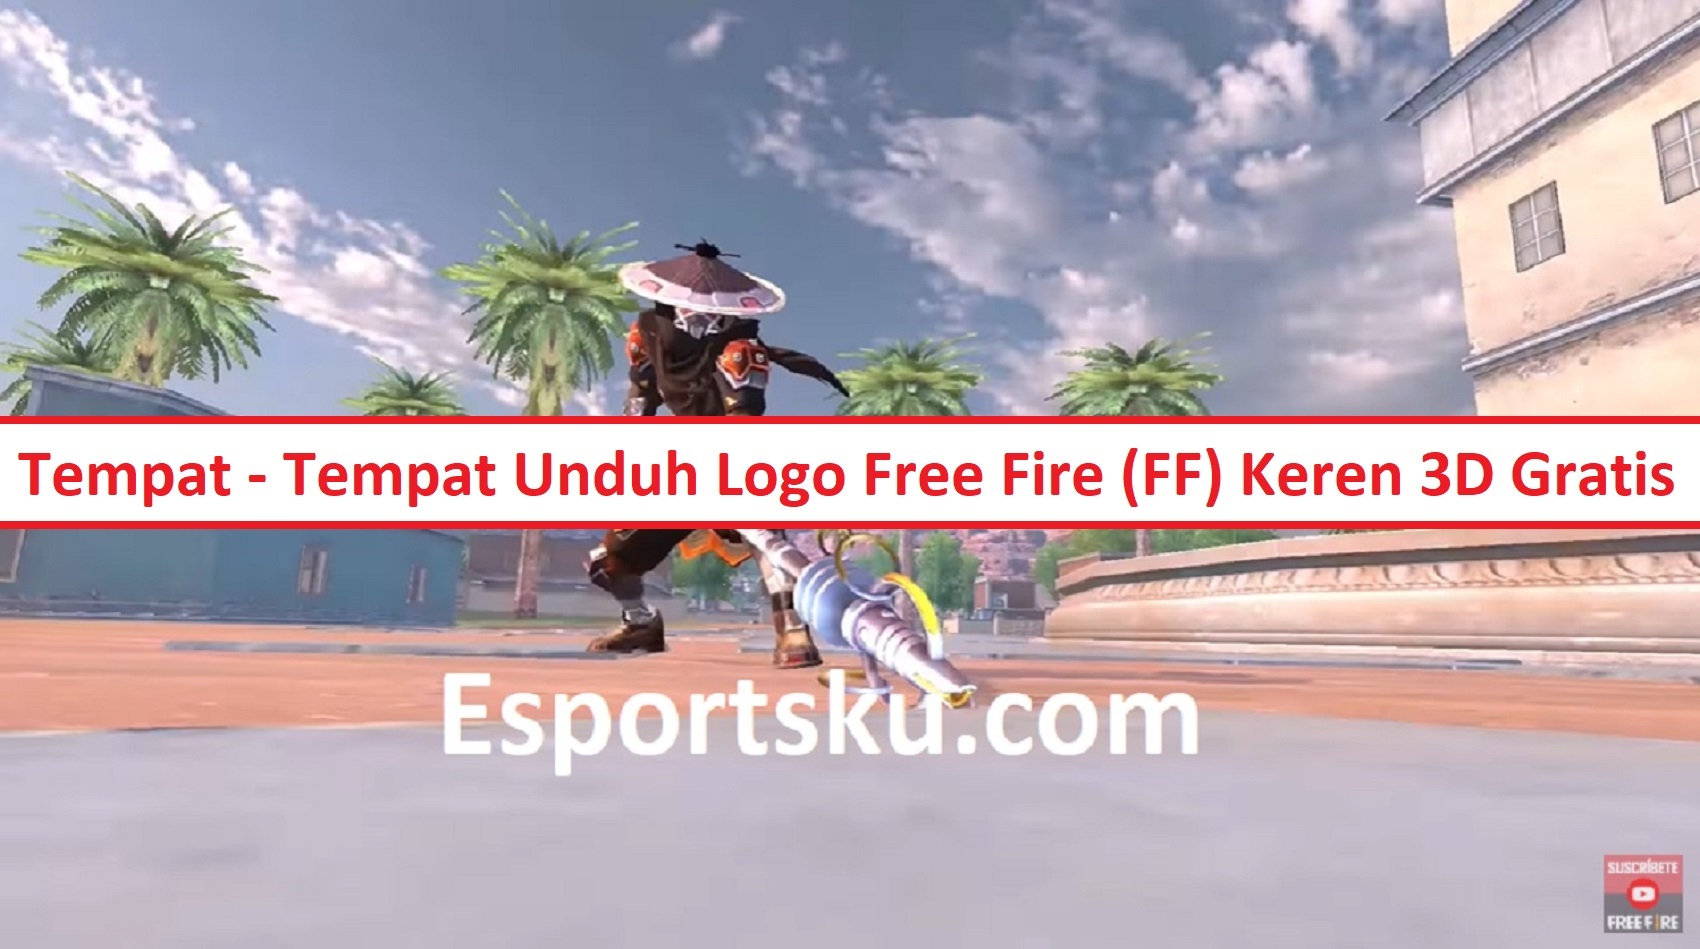 Tempat Tempat Unduh Logo Free Fire FF Keren 3D Gratis Esportsku